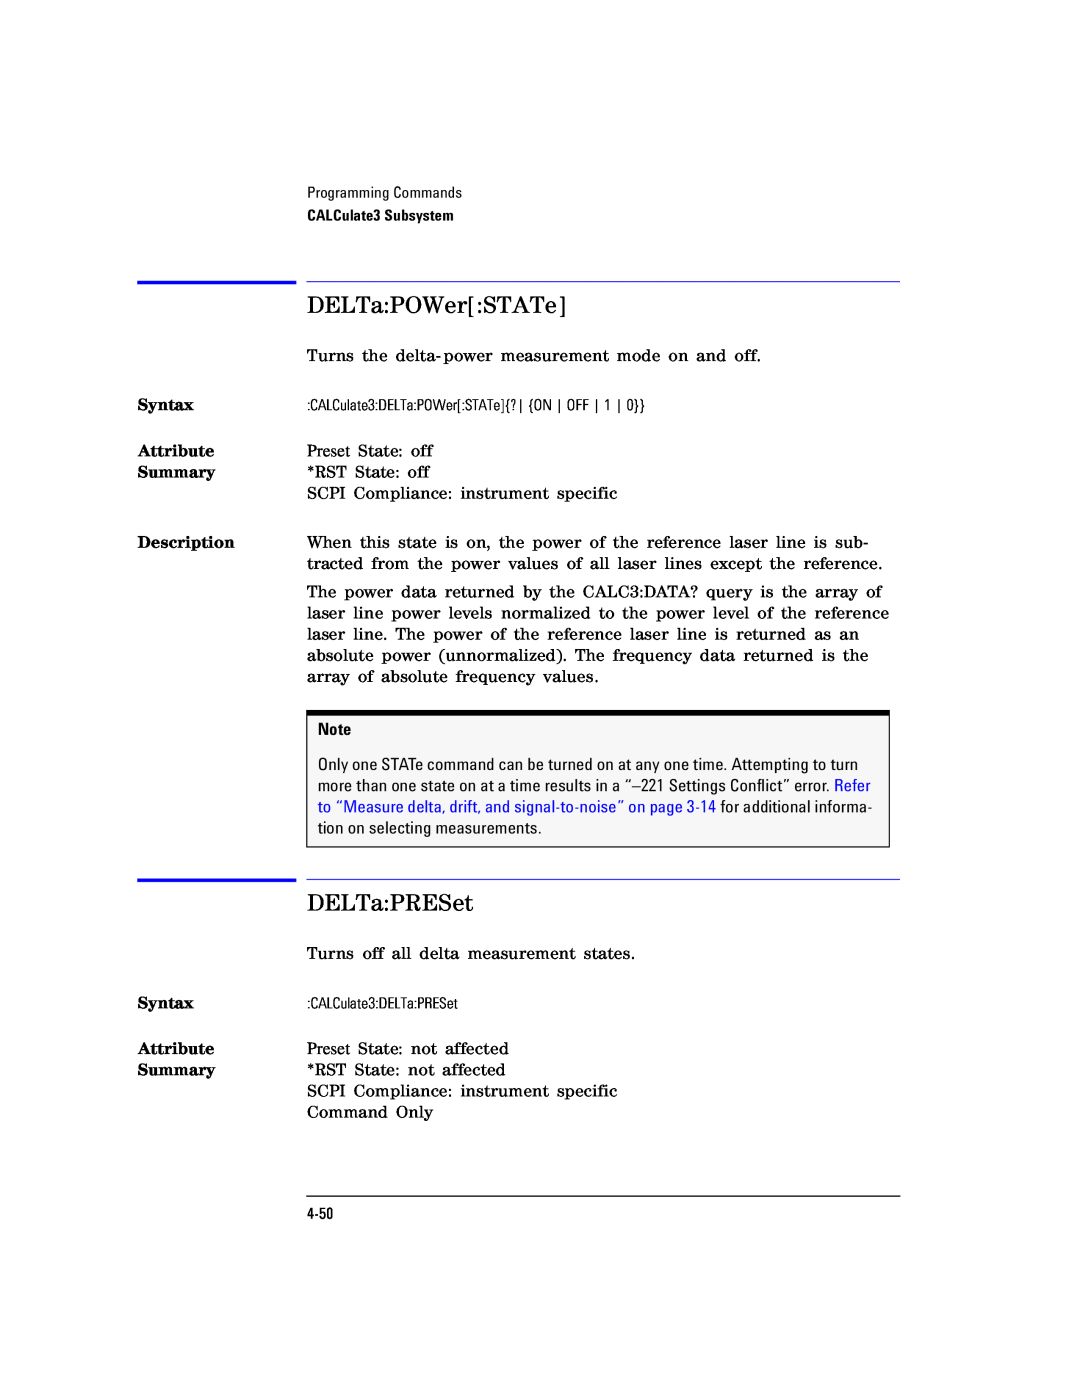 Agilent Technologies Agilent 86120C manual DELTaPOWerSTATe, DELTaPRESet, Syntax, Attribute, Summary, Description 